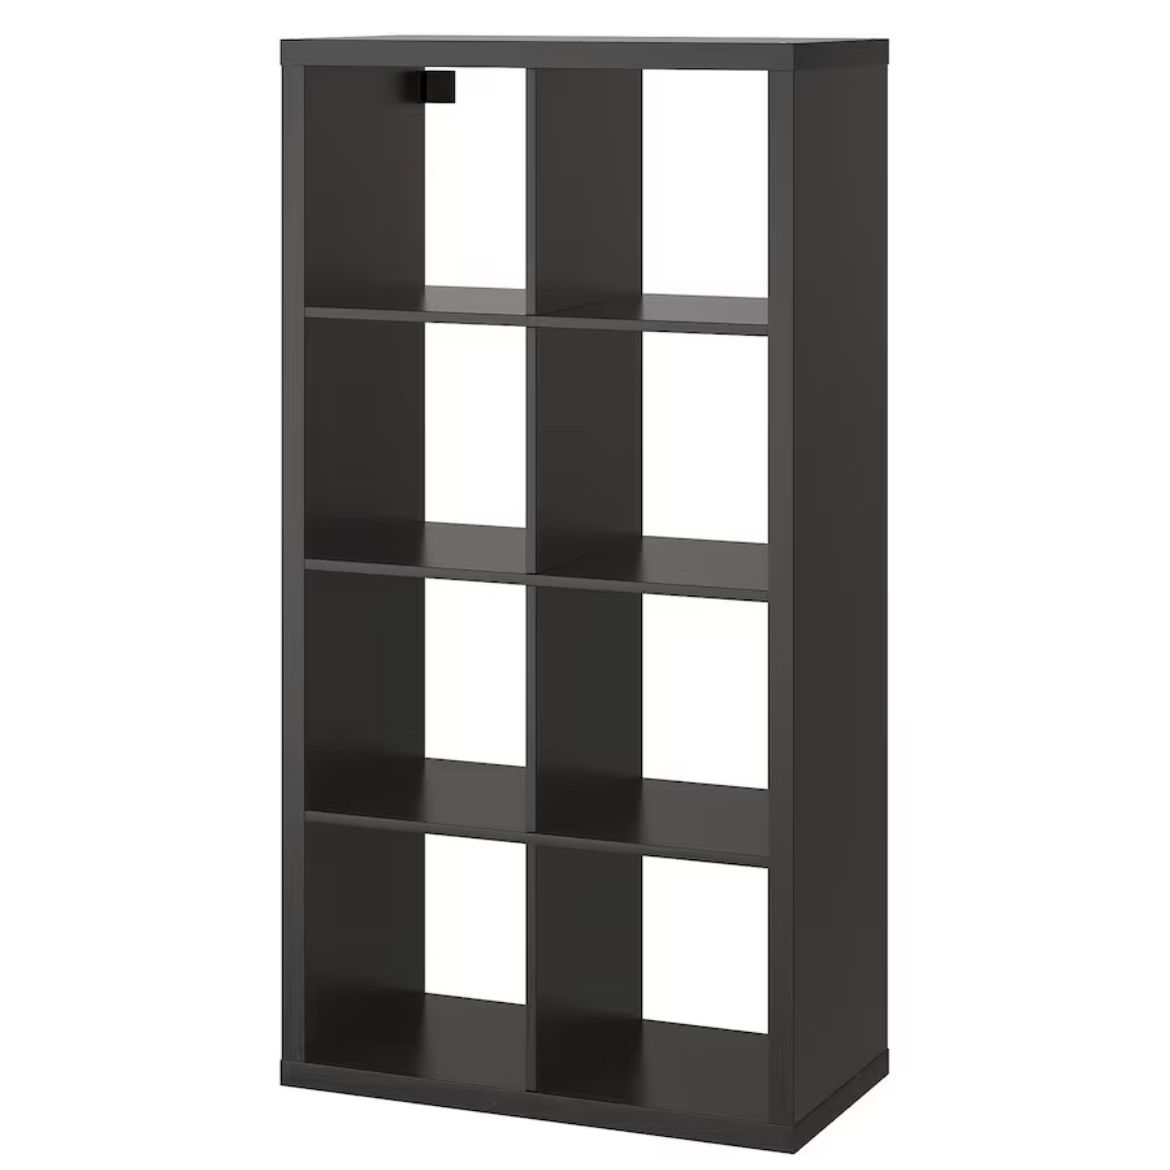 IKEA Kallax Bookshelf